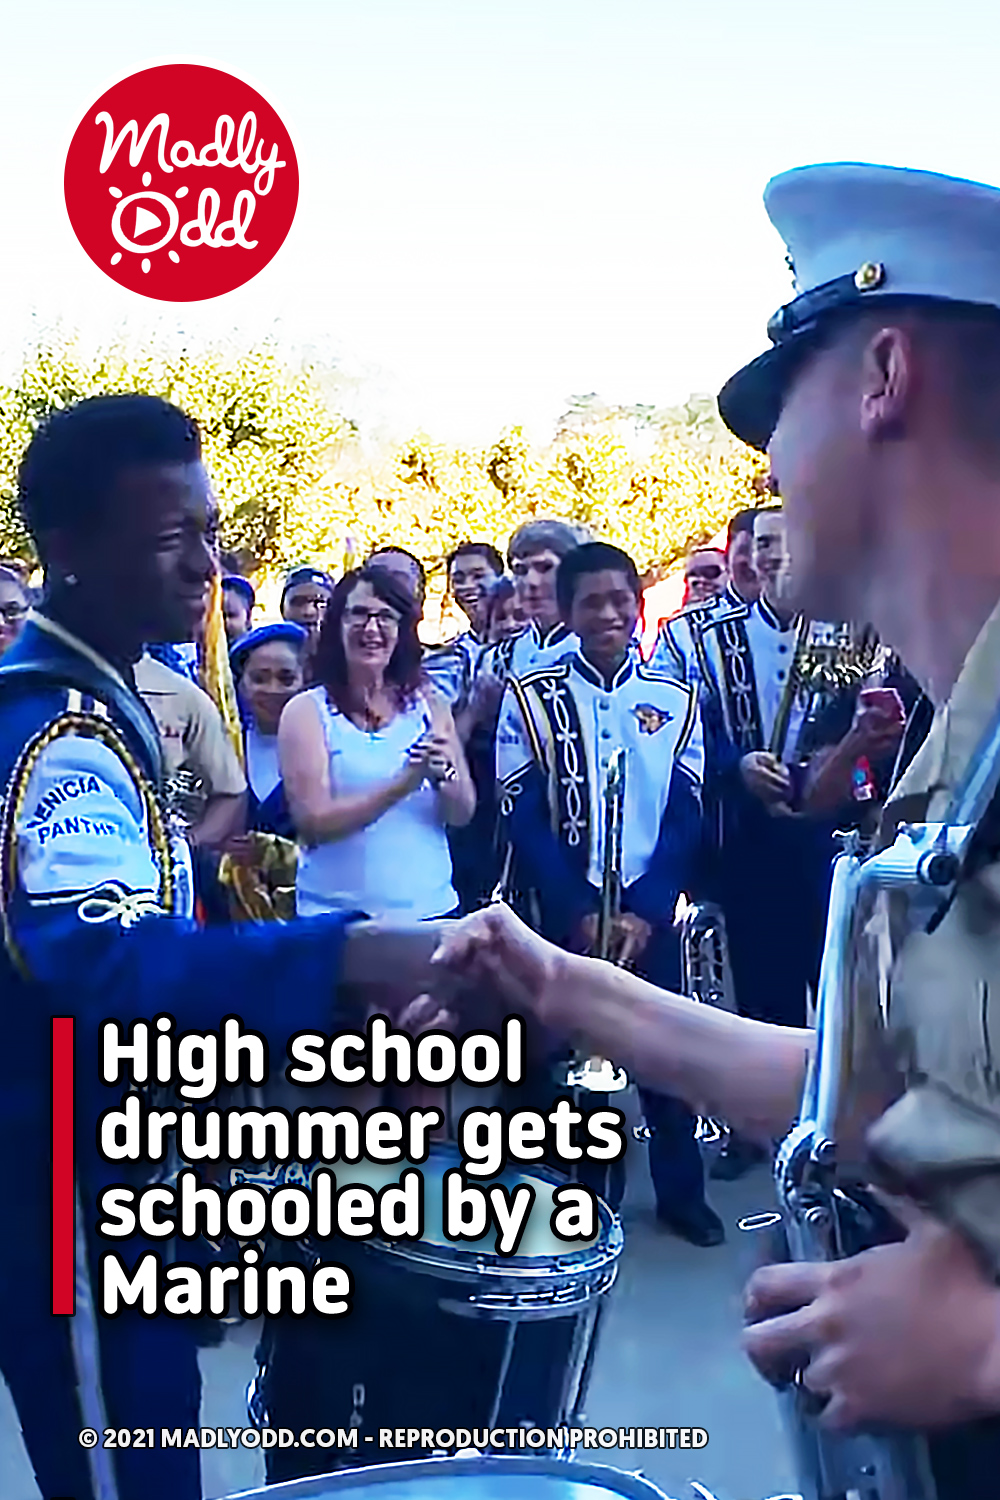 High school drummer gets schooled by a Marine